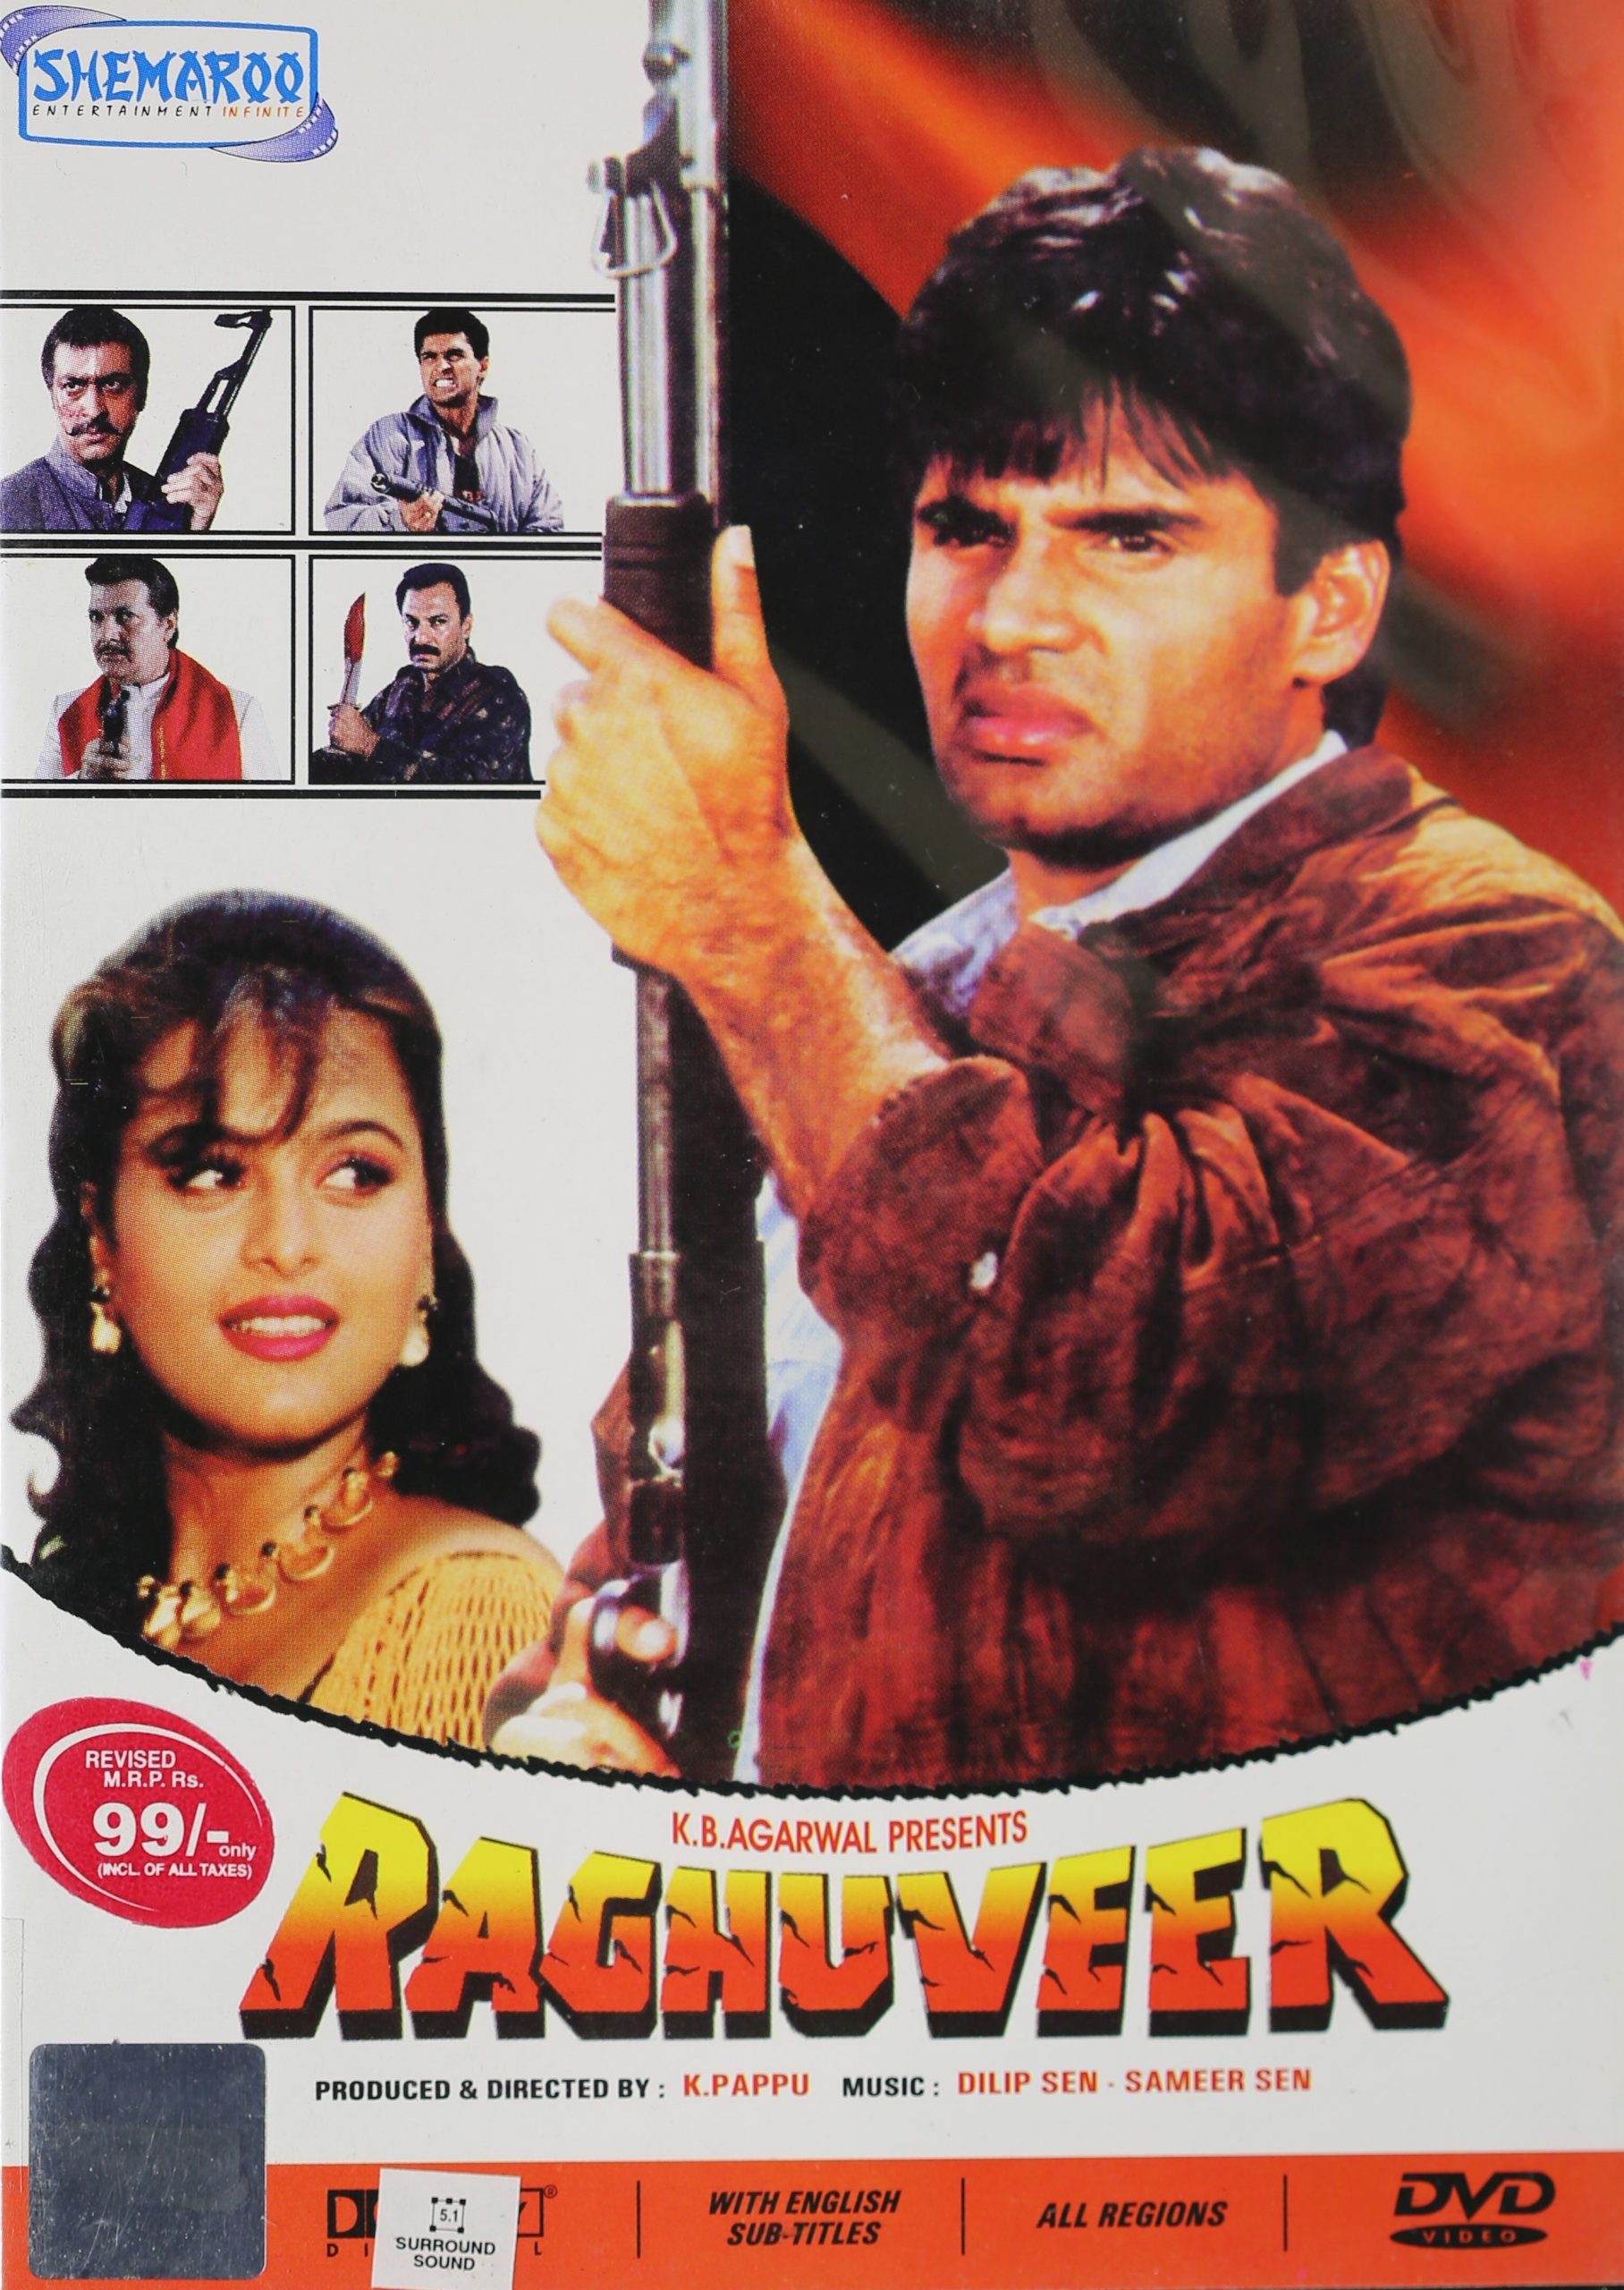 raghuveer-1995-5825-poster.jpg